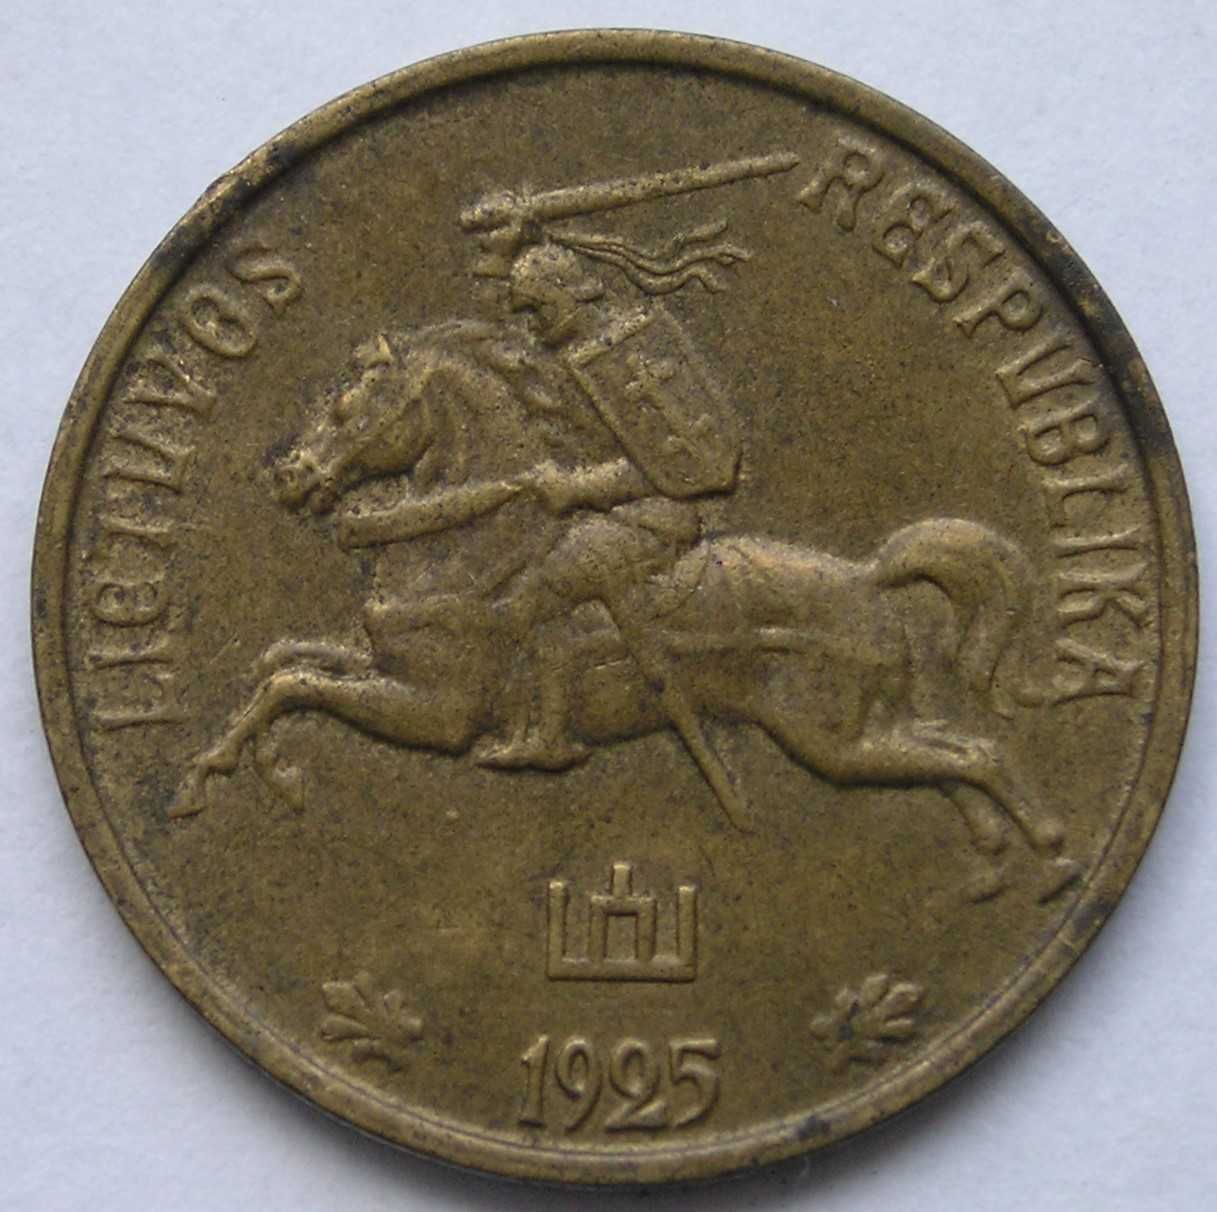 Litwa 5 centai 1925